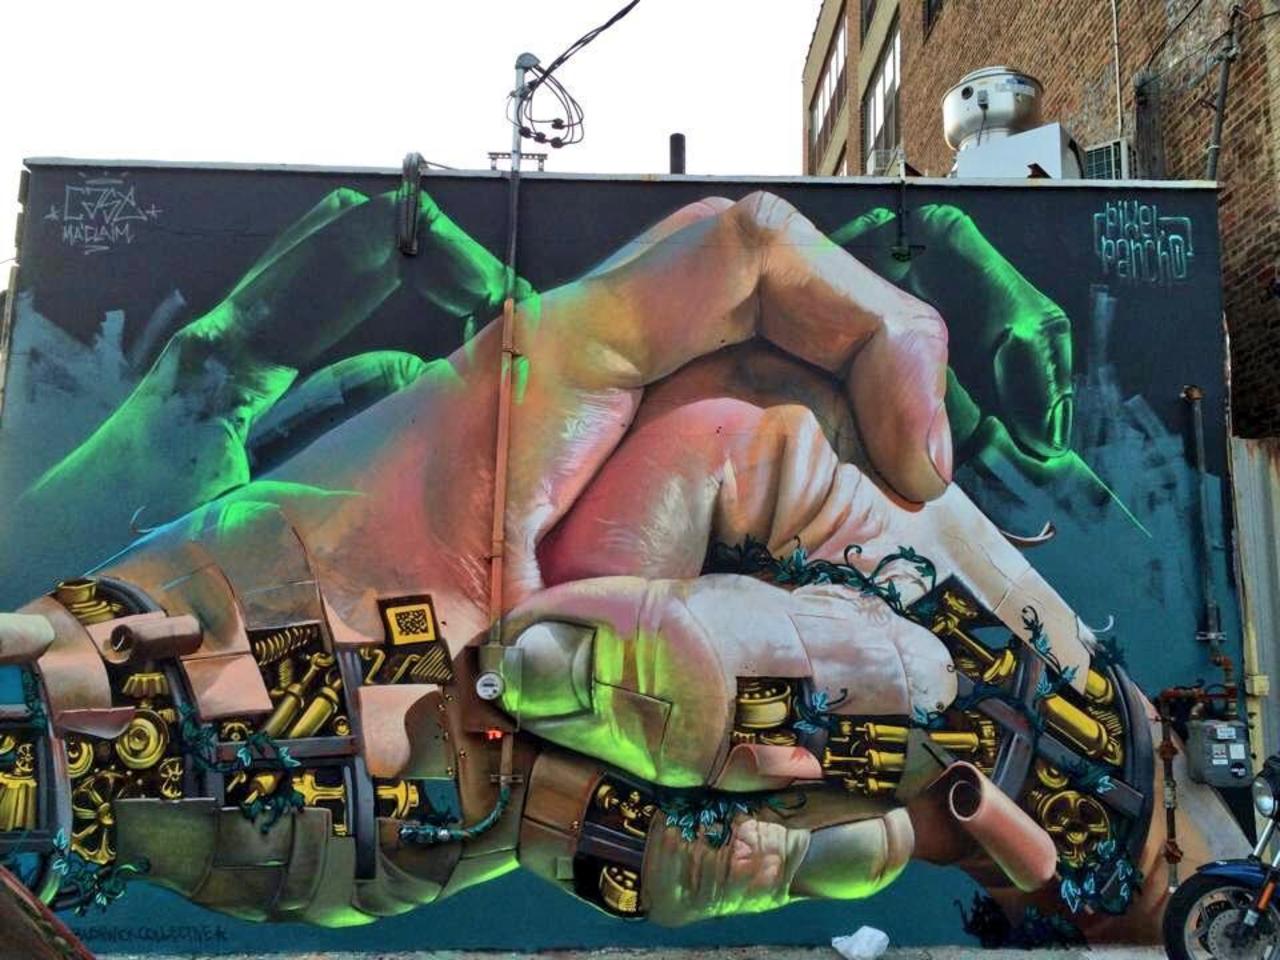 "@Pitchuskita: Pixel Pancho x Case Ma’Claim 
New York

#streetart #art #graffiti #mural #urbanart http://t.co/HJAle8nSn9"